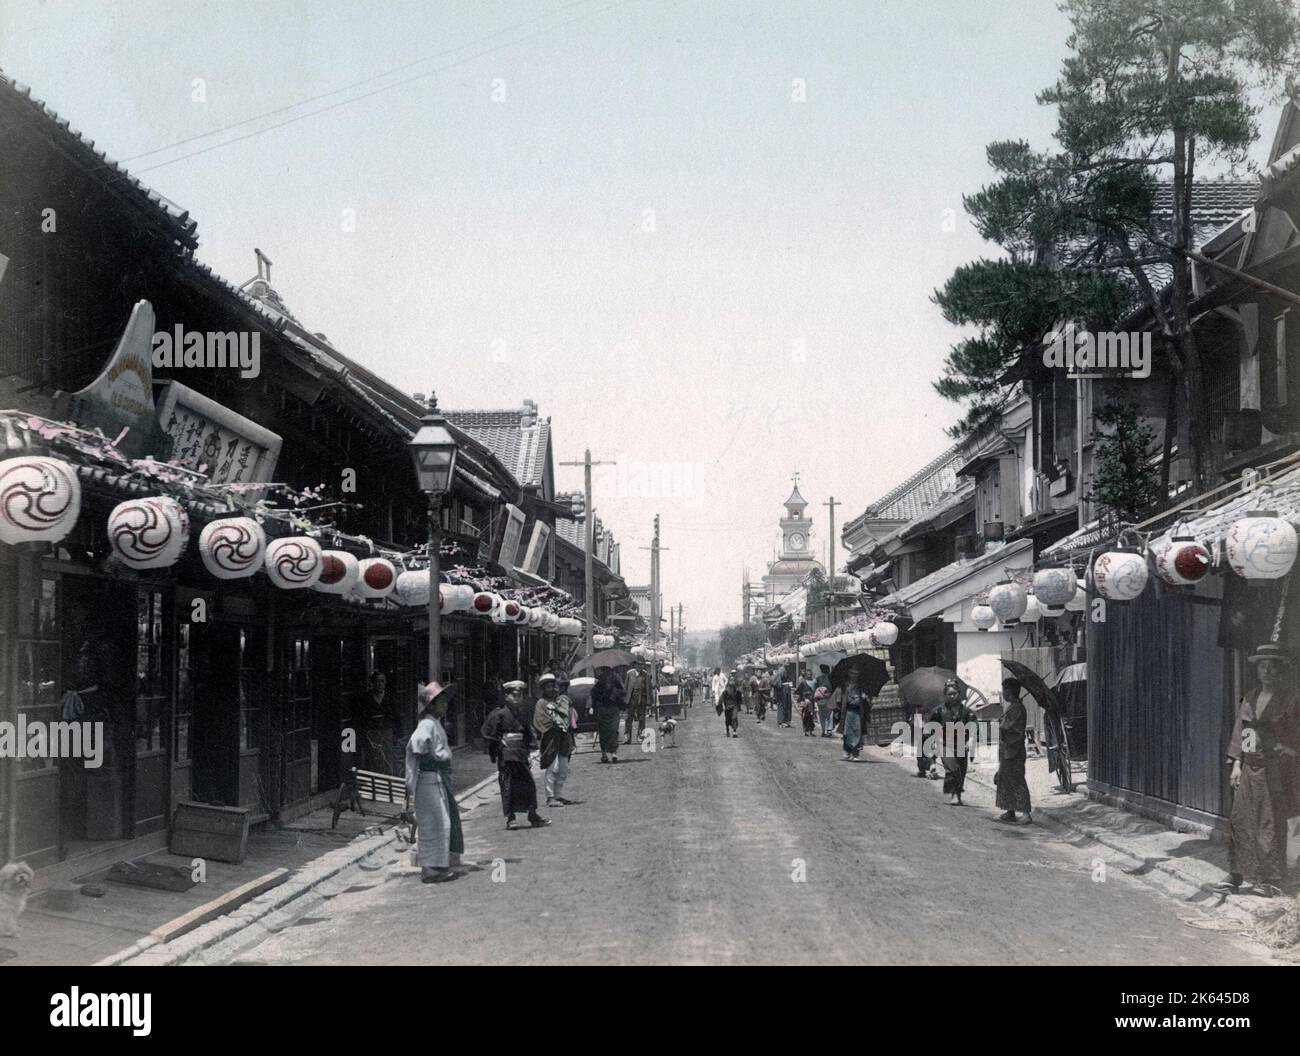 Street filled with festival lanterns, Bentendori, Yokohama, Japan, c.1880's Vintage late 19th century photograph Stock Photo